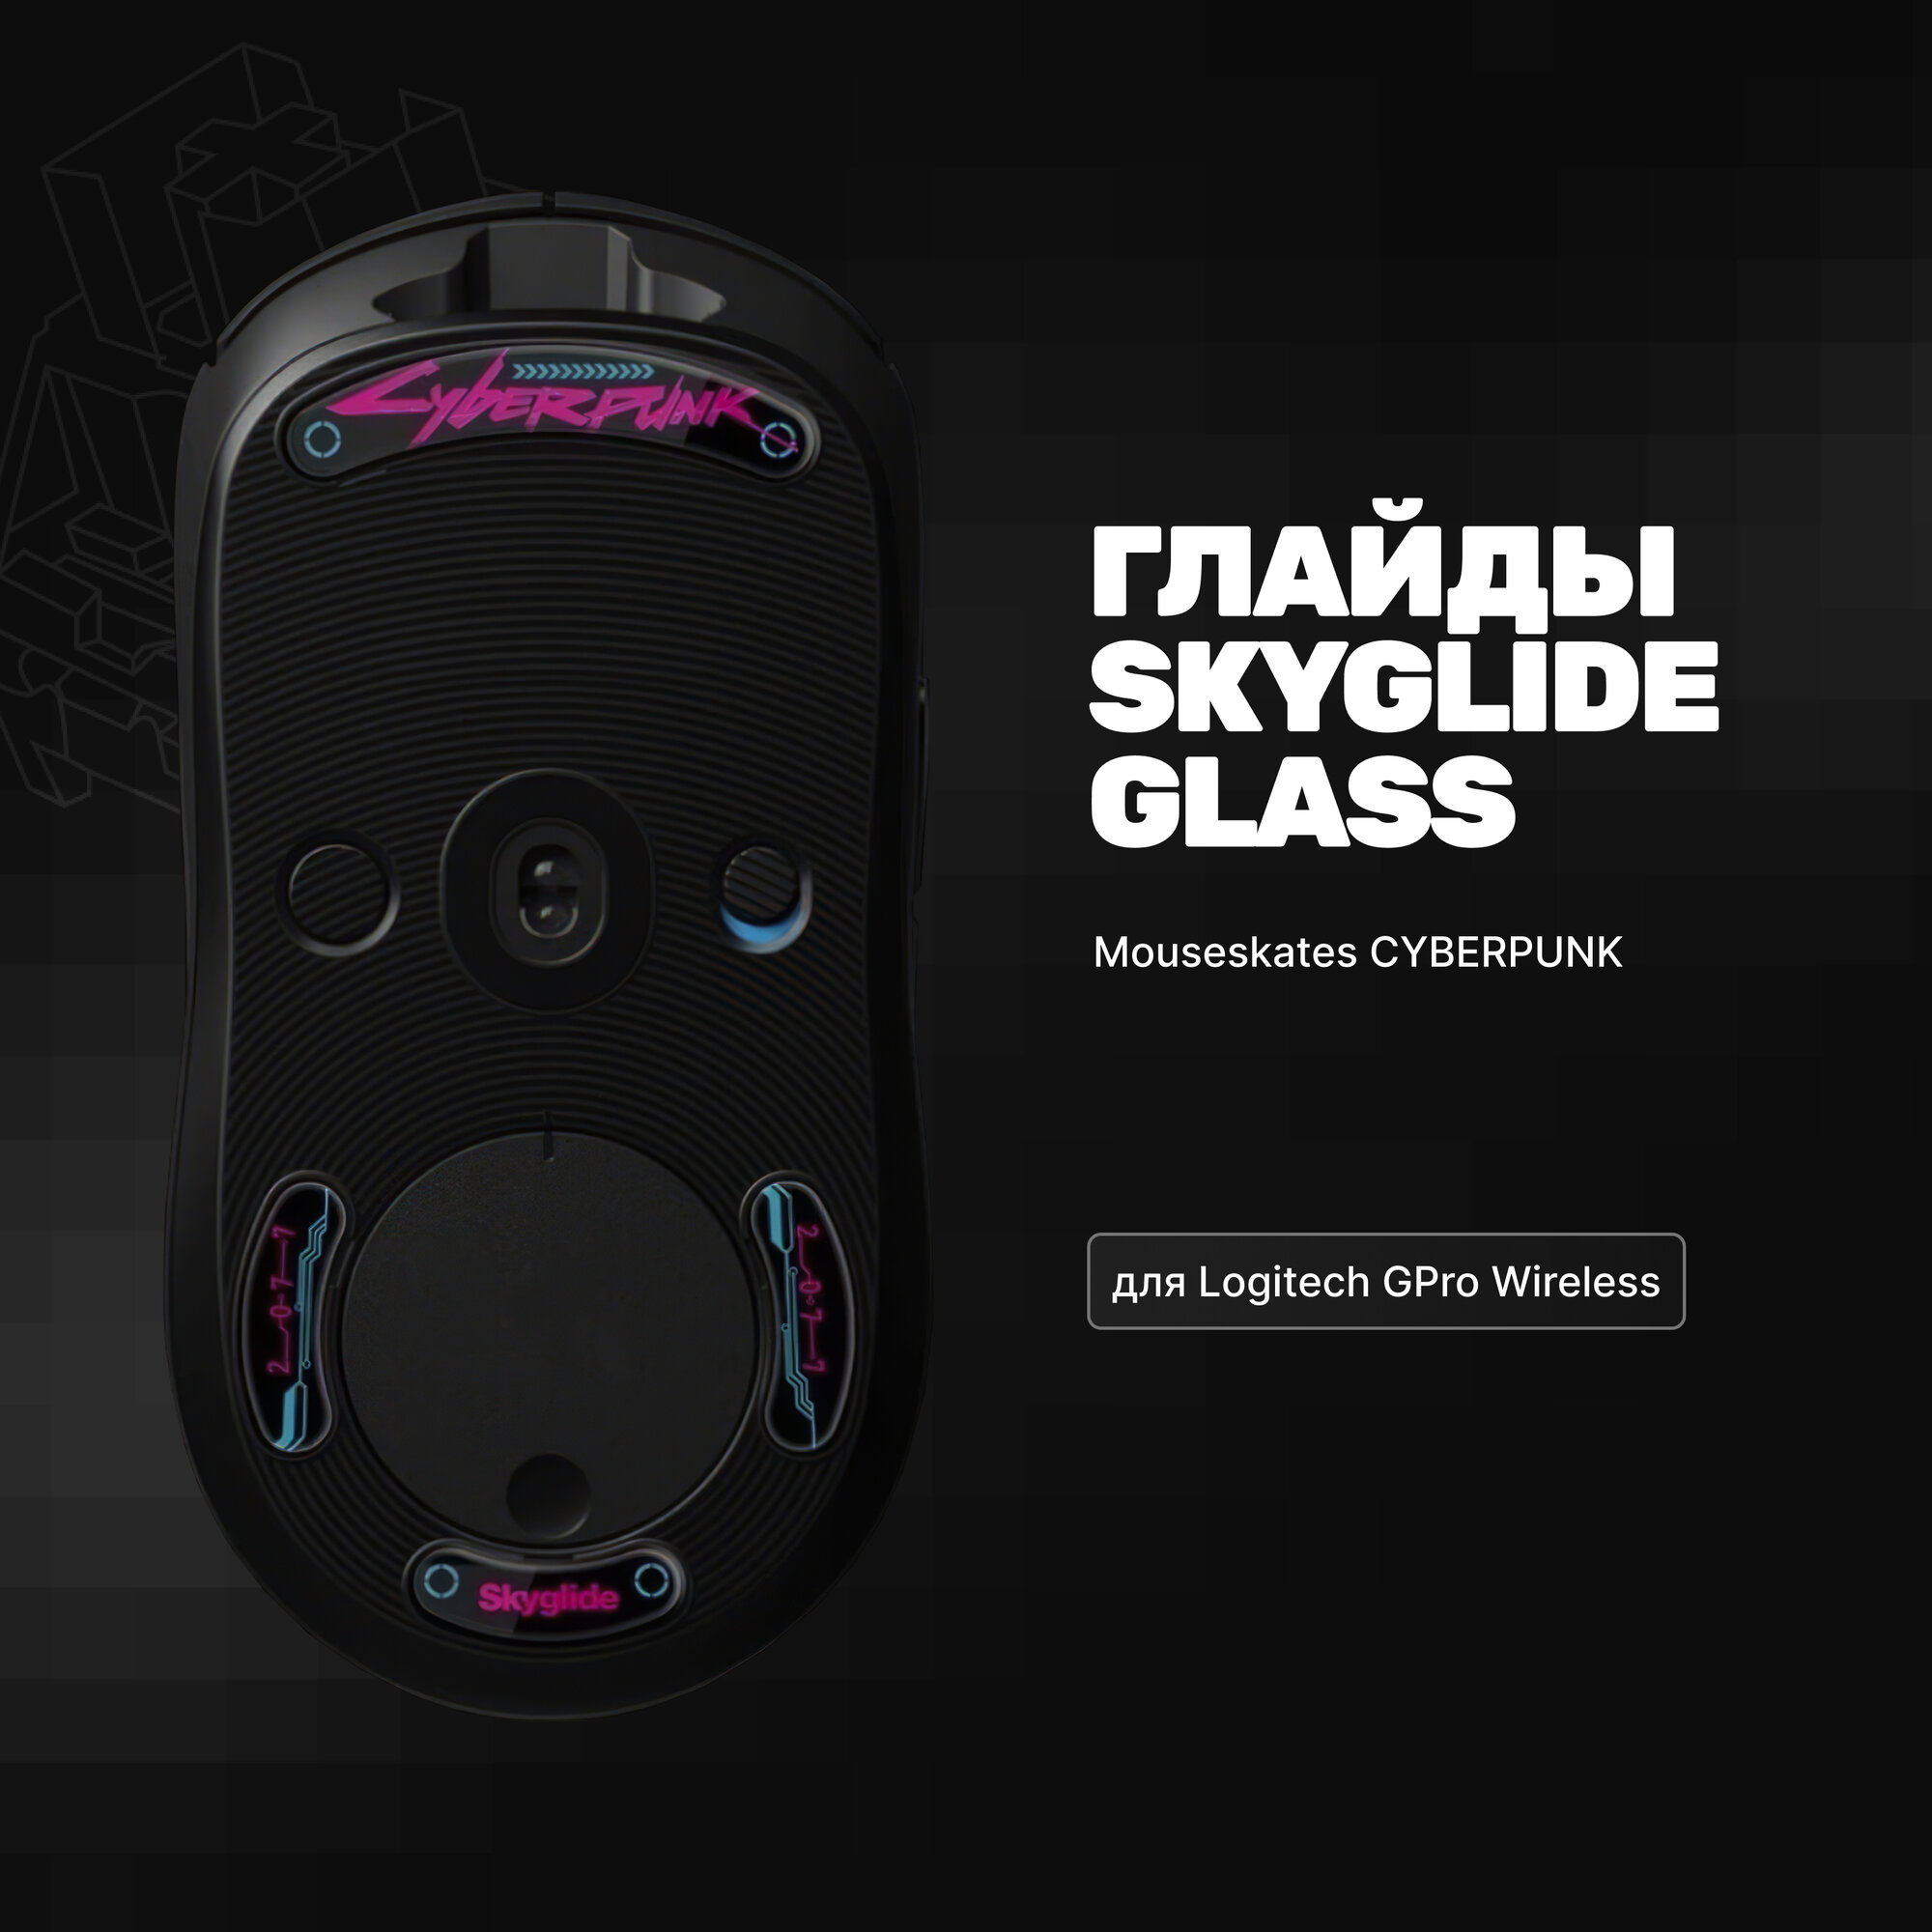 Стеклянные глайды Skyglide Glass Mouseskates CYBERPUNK для Logitech GPro Wireless. Ножки для игровой мыши